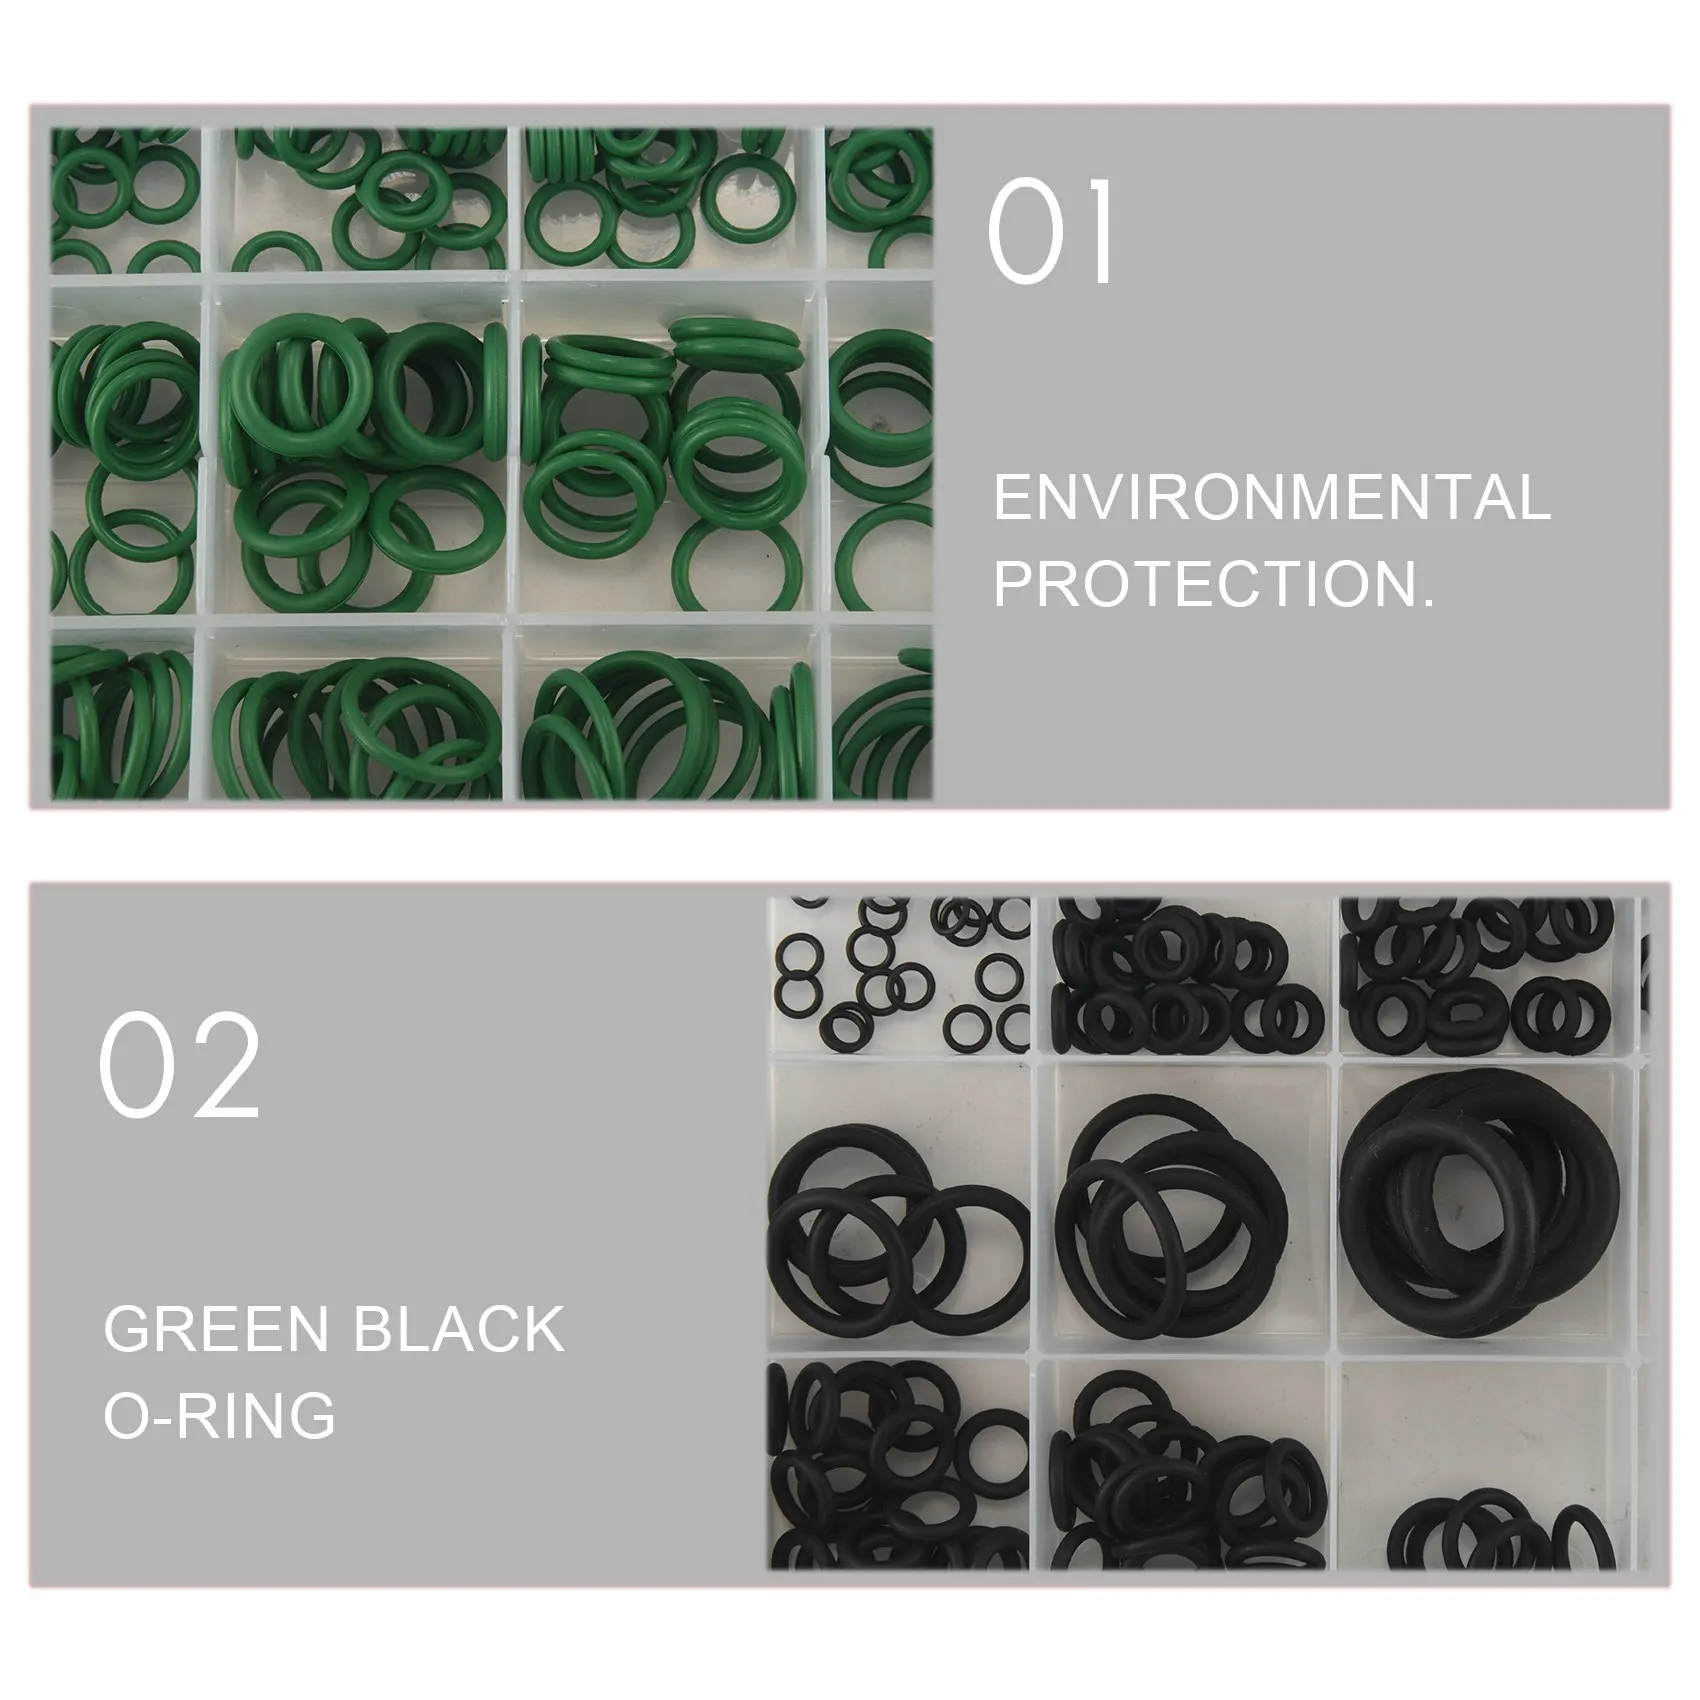 

495PCS 36 Sizes O-ring Kit Black&Green Metric O ring Seals Rubber O ring Gaskets oil resistance 270pcs + 225pcs